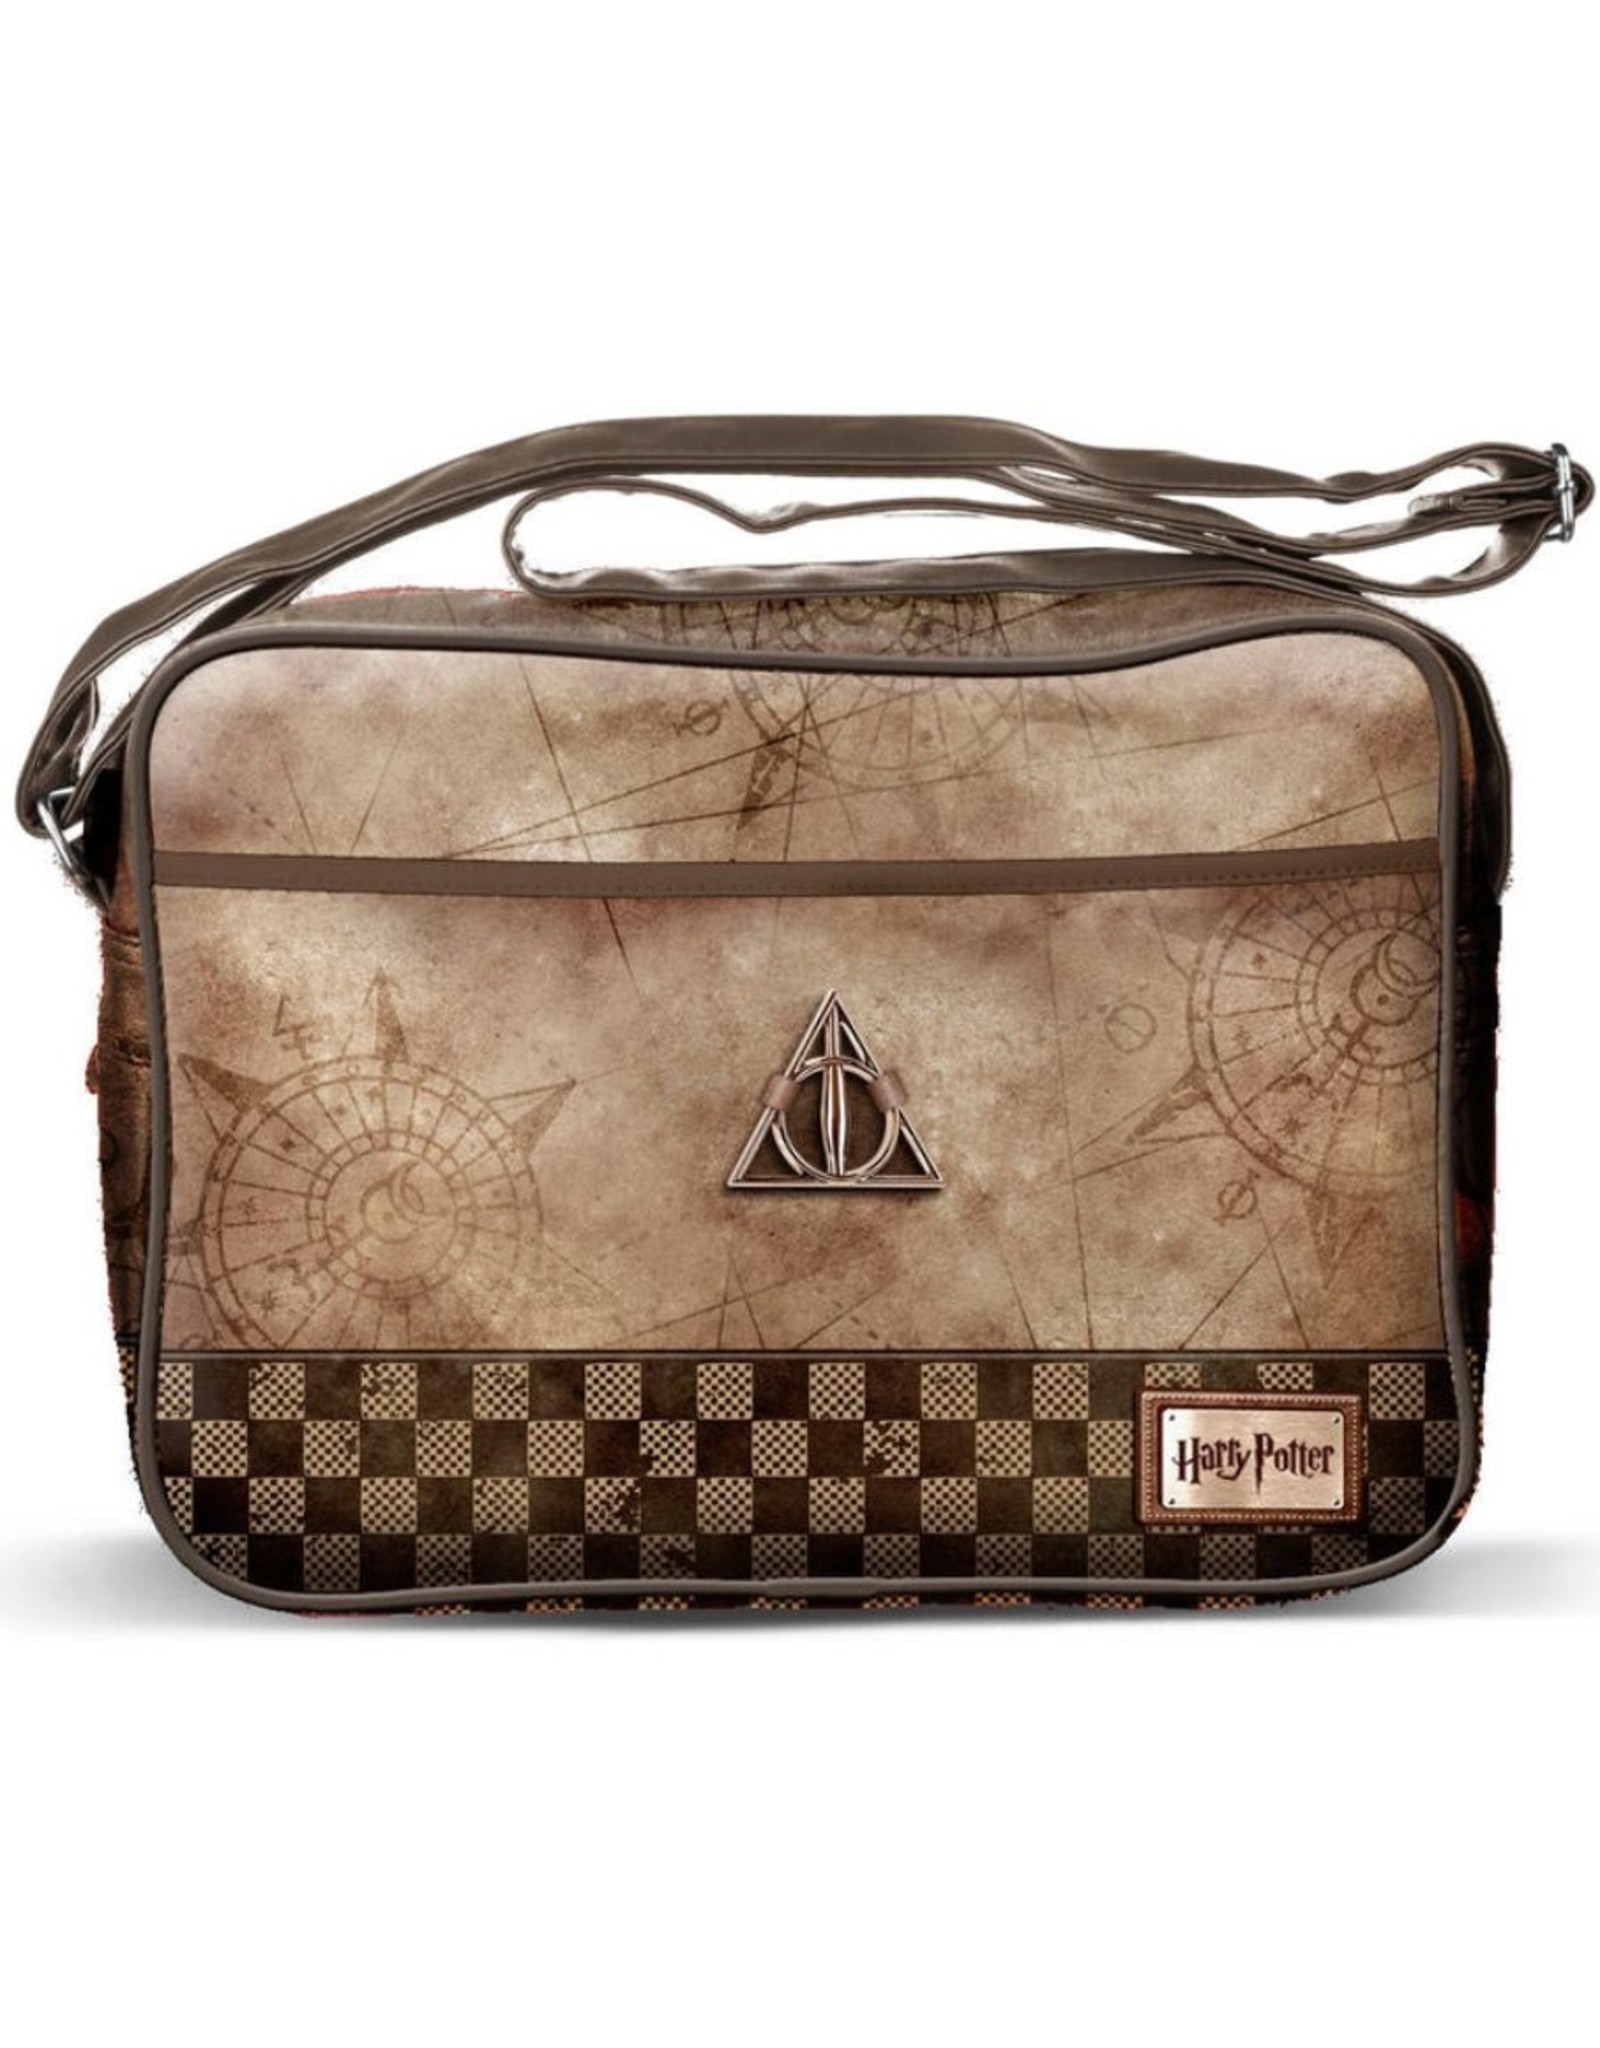 Harry Potter Harry Potter bags - Harry Potter The Deathly Hallows messenger bag